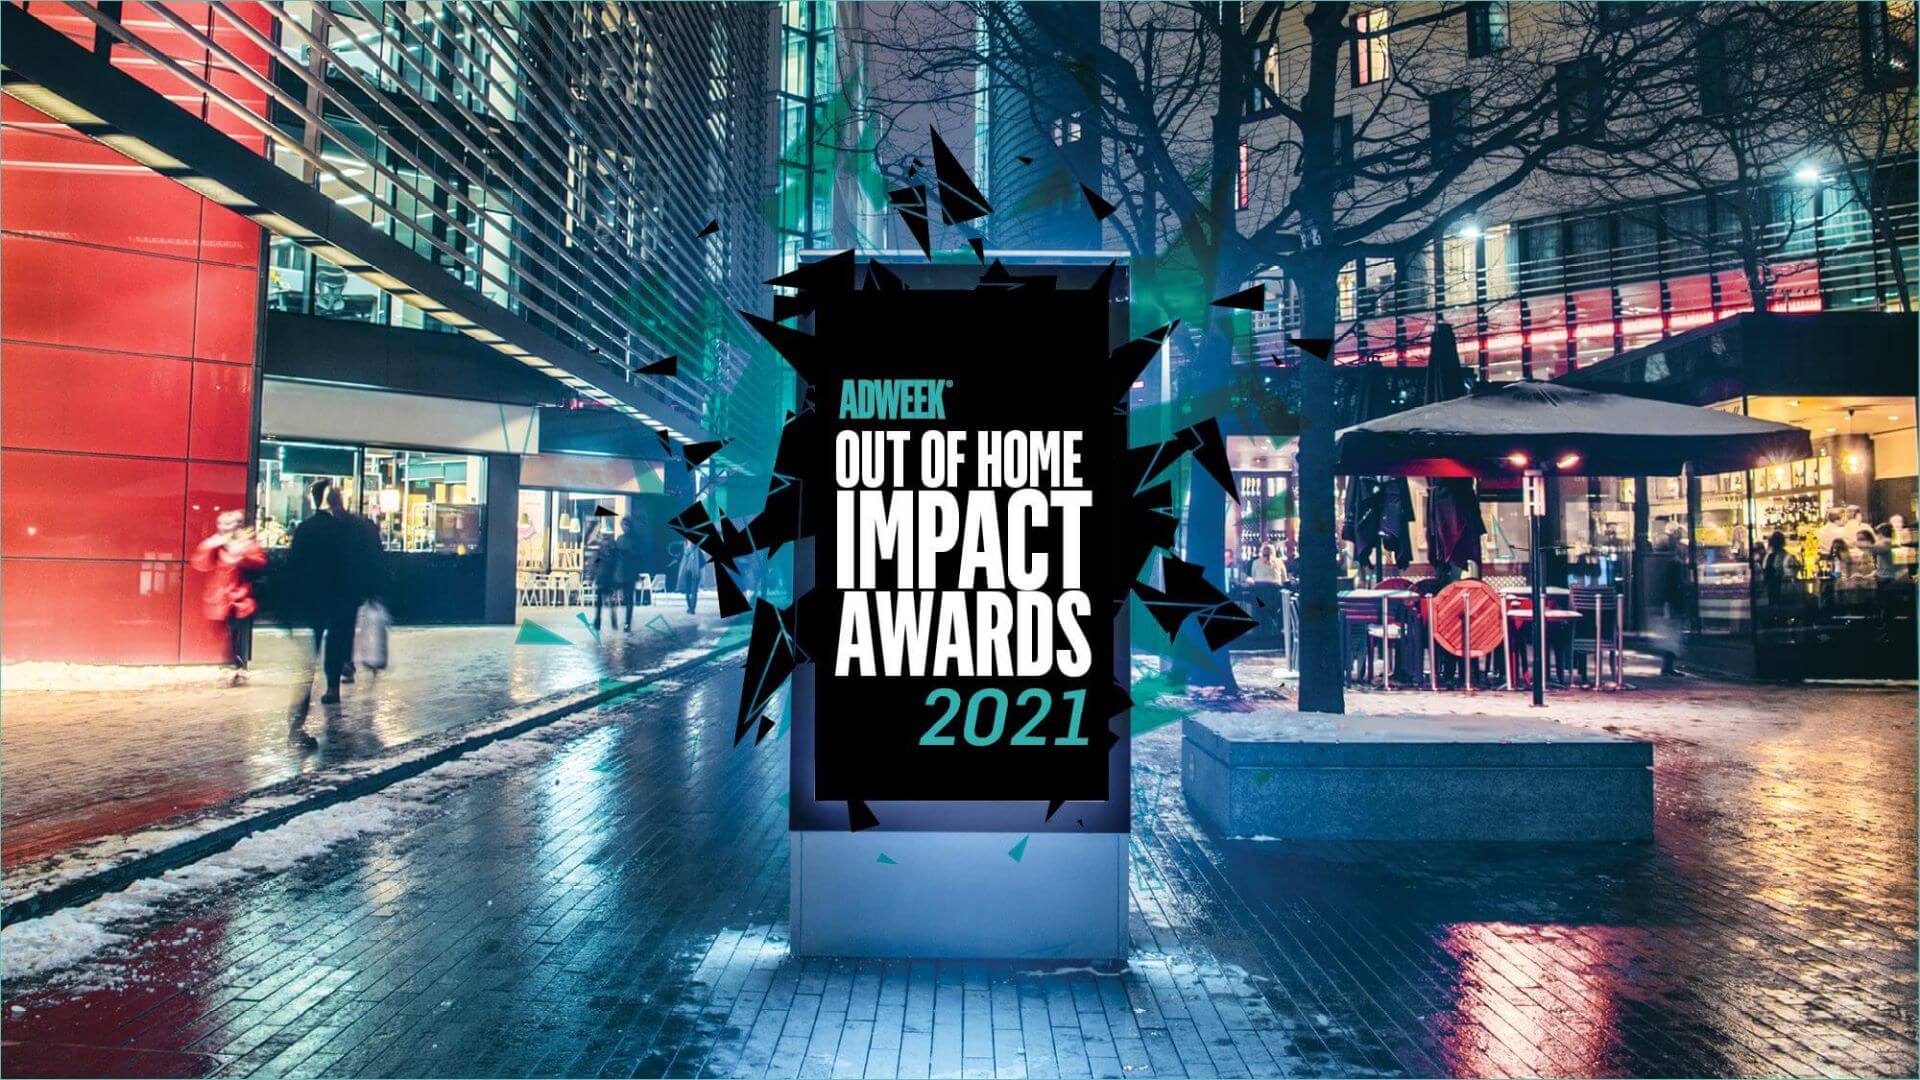 Adweek OutofHome Impact Awards